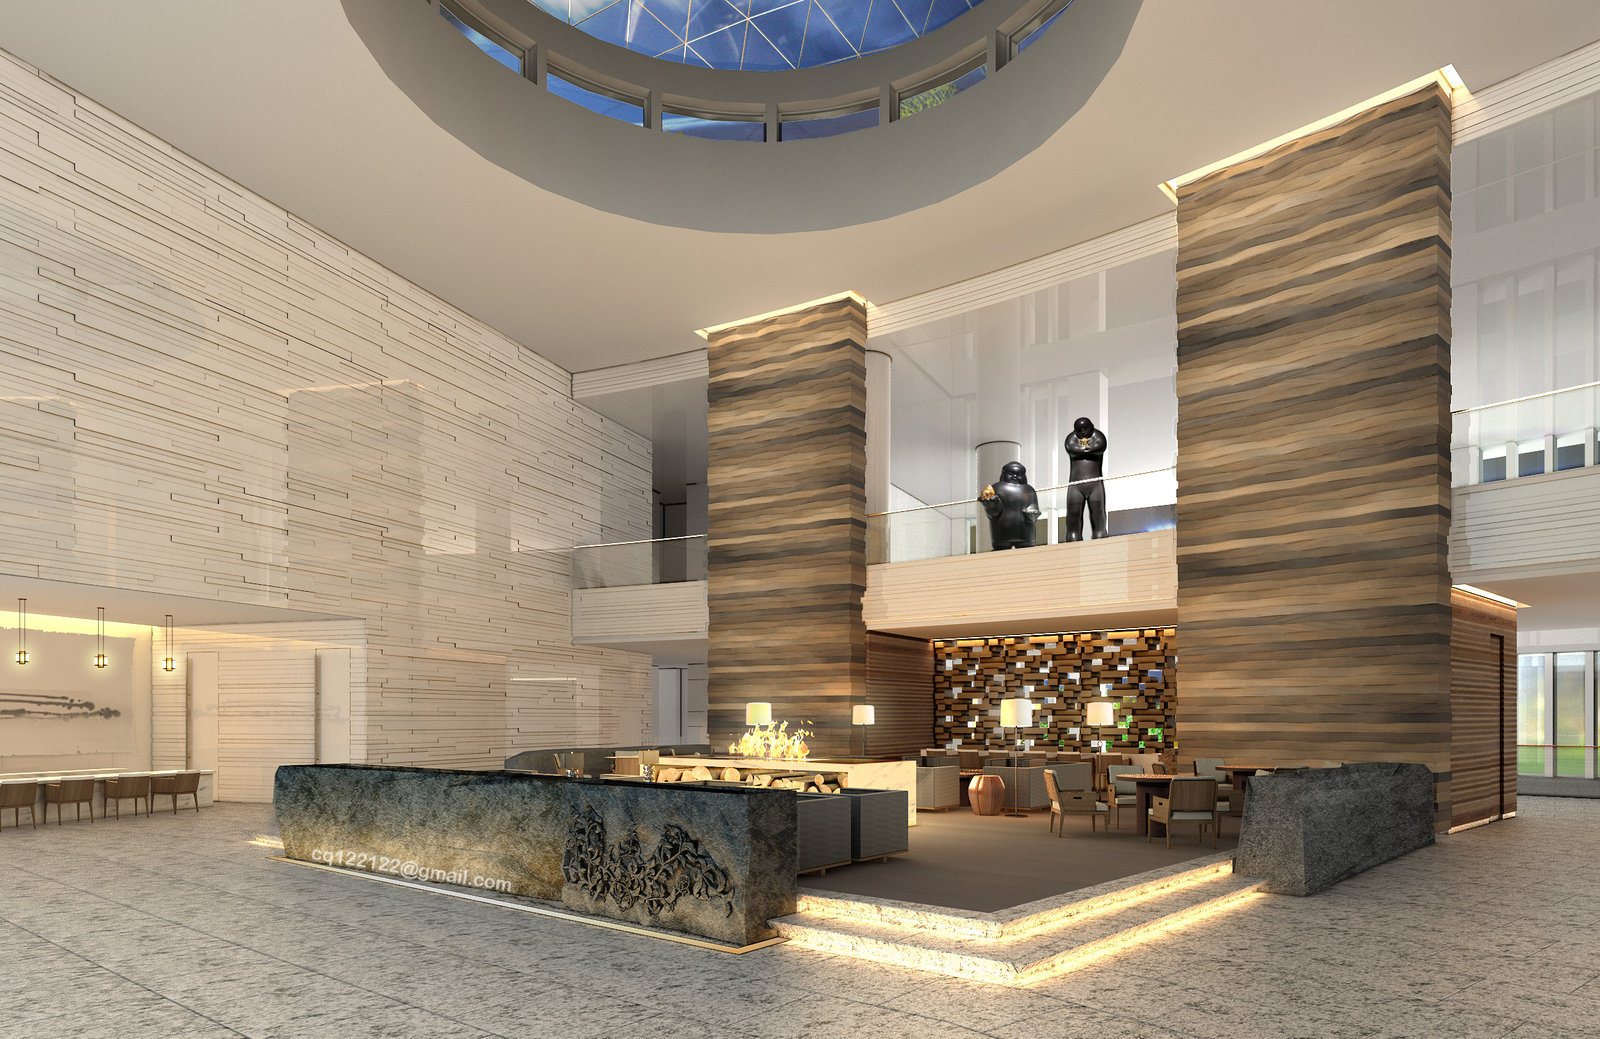 6 ways hotel lobbies teach us about interior design for Ideal hotel design